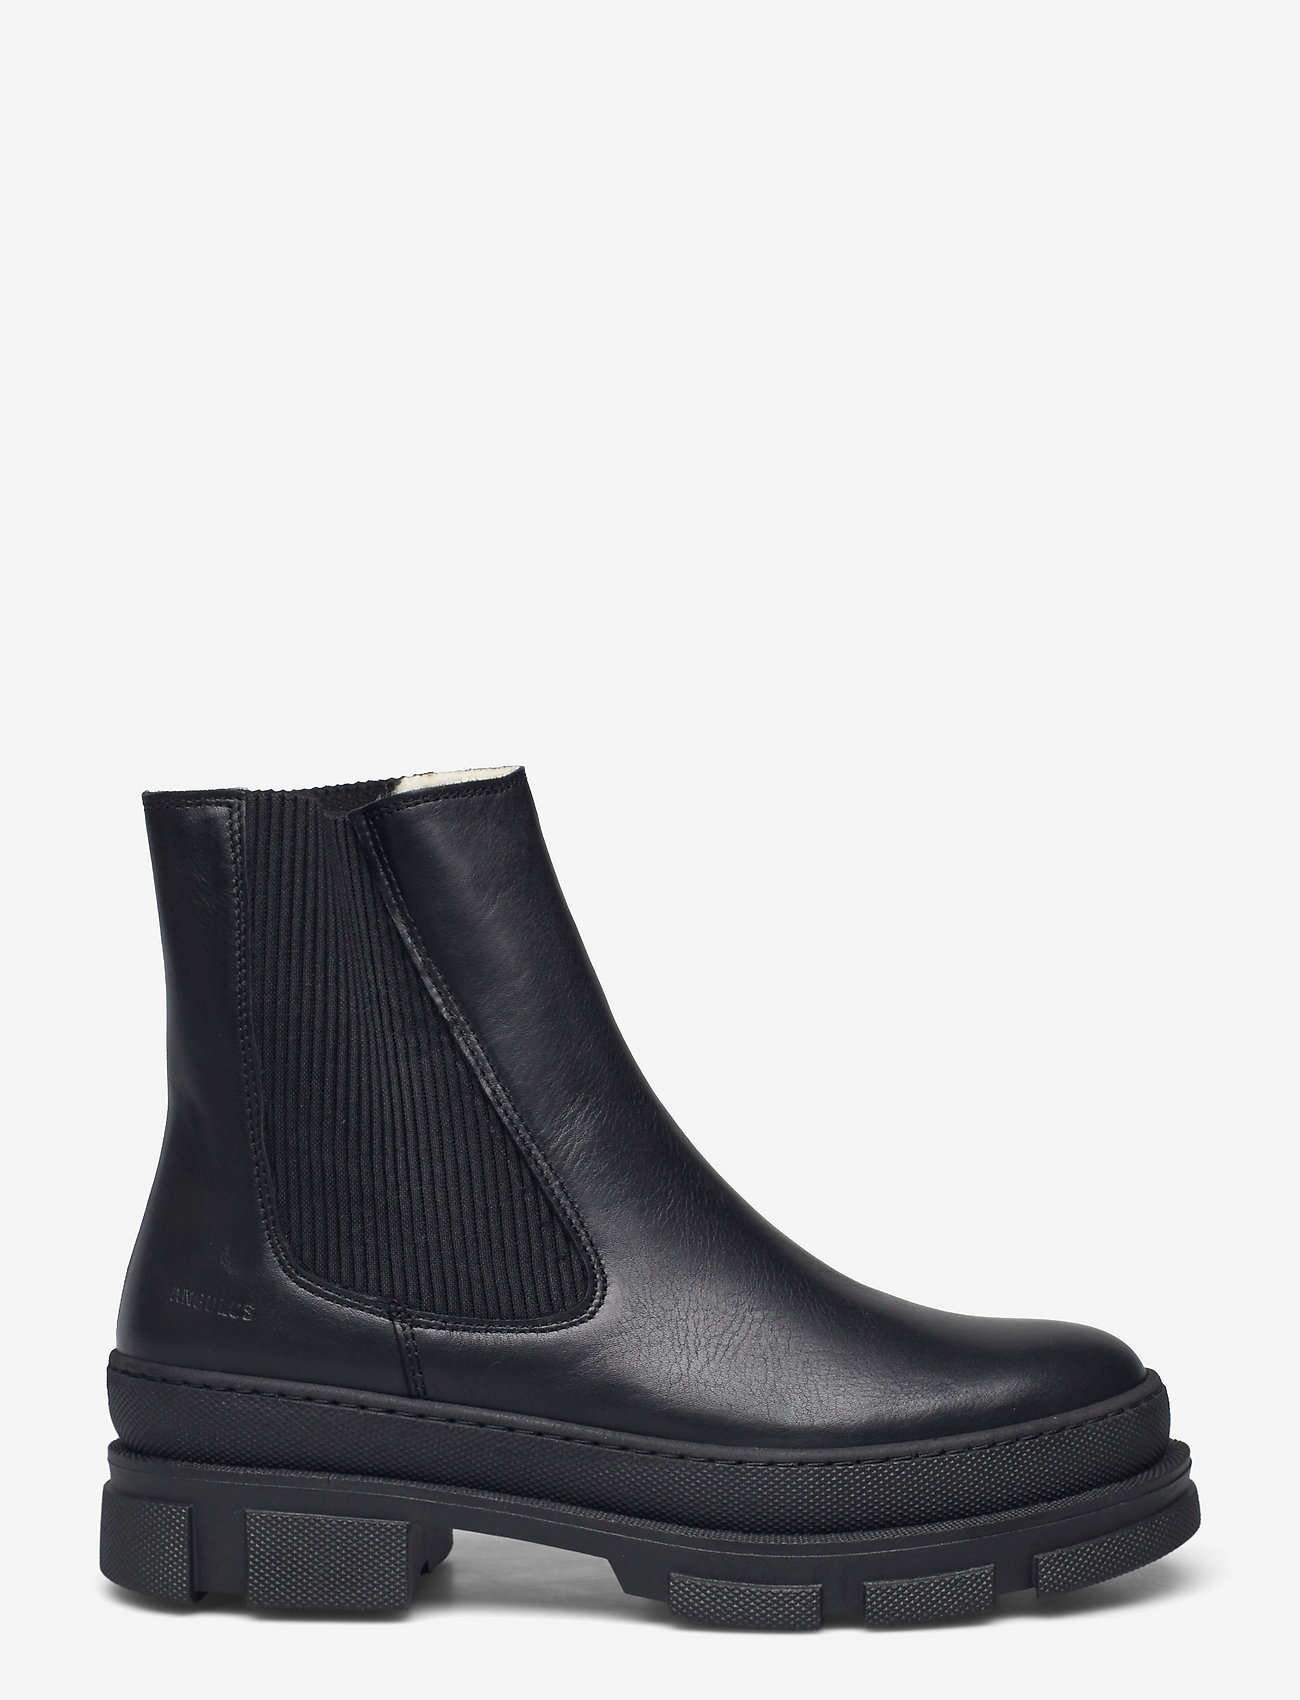 ANGULUS - Boots - flat - chelsea stila zābaki - 1604/019 black/black - 1